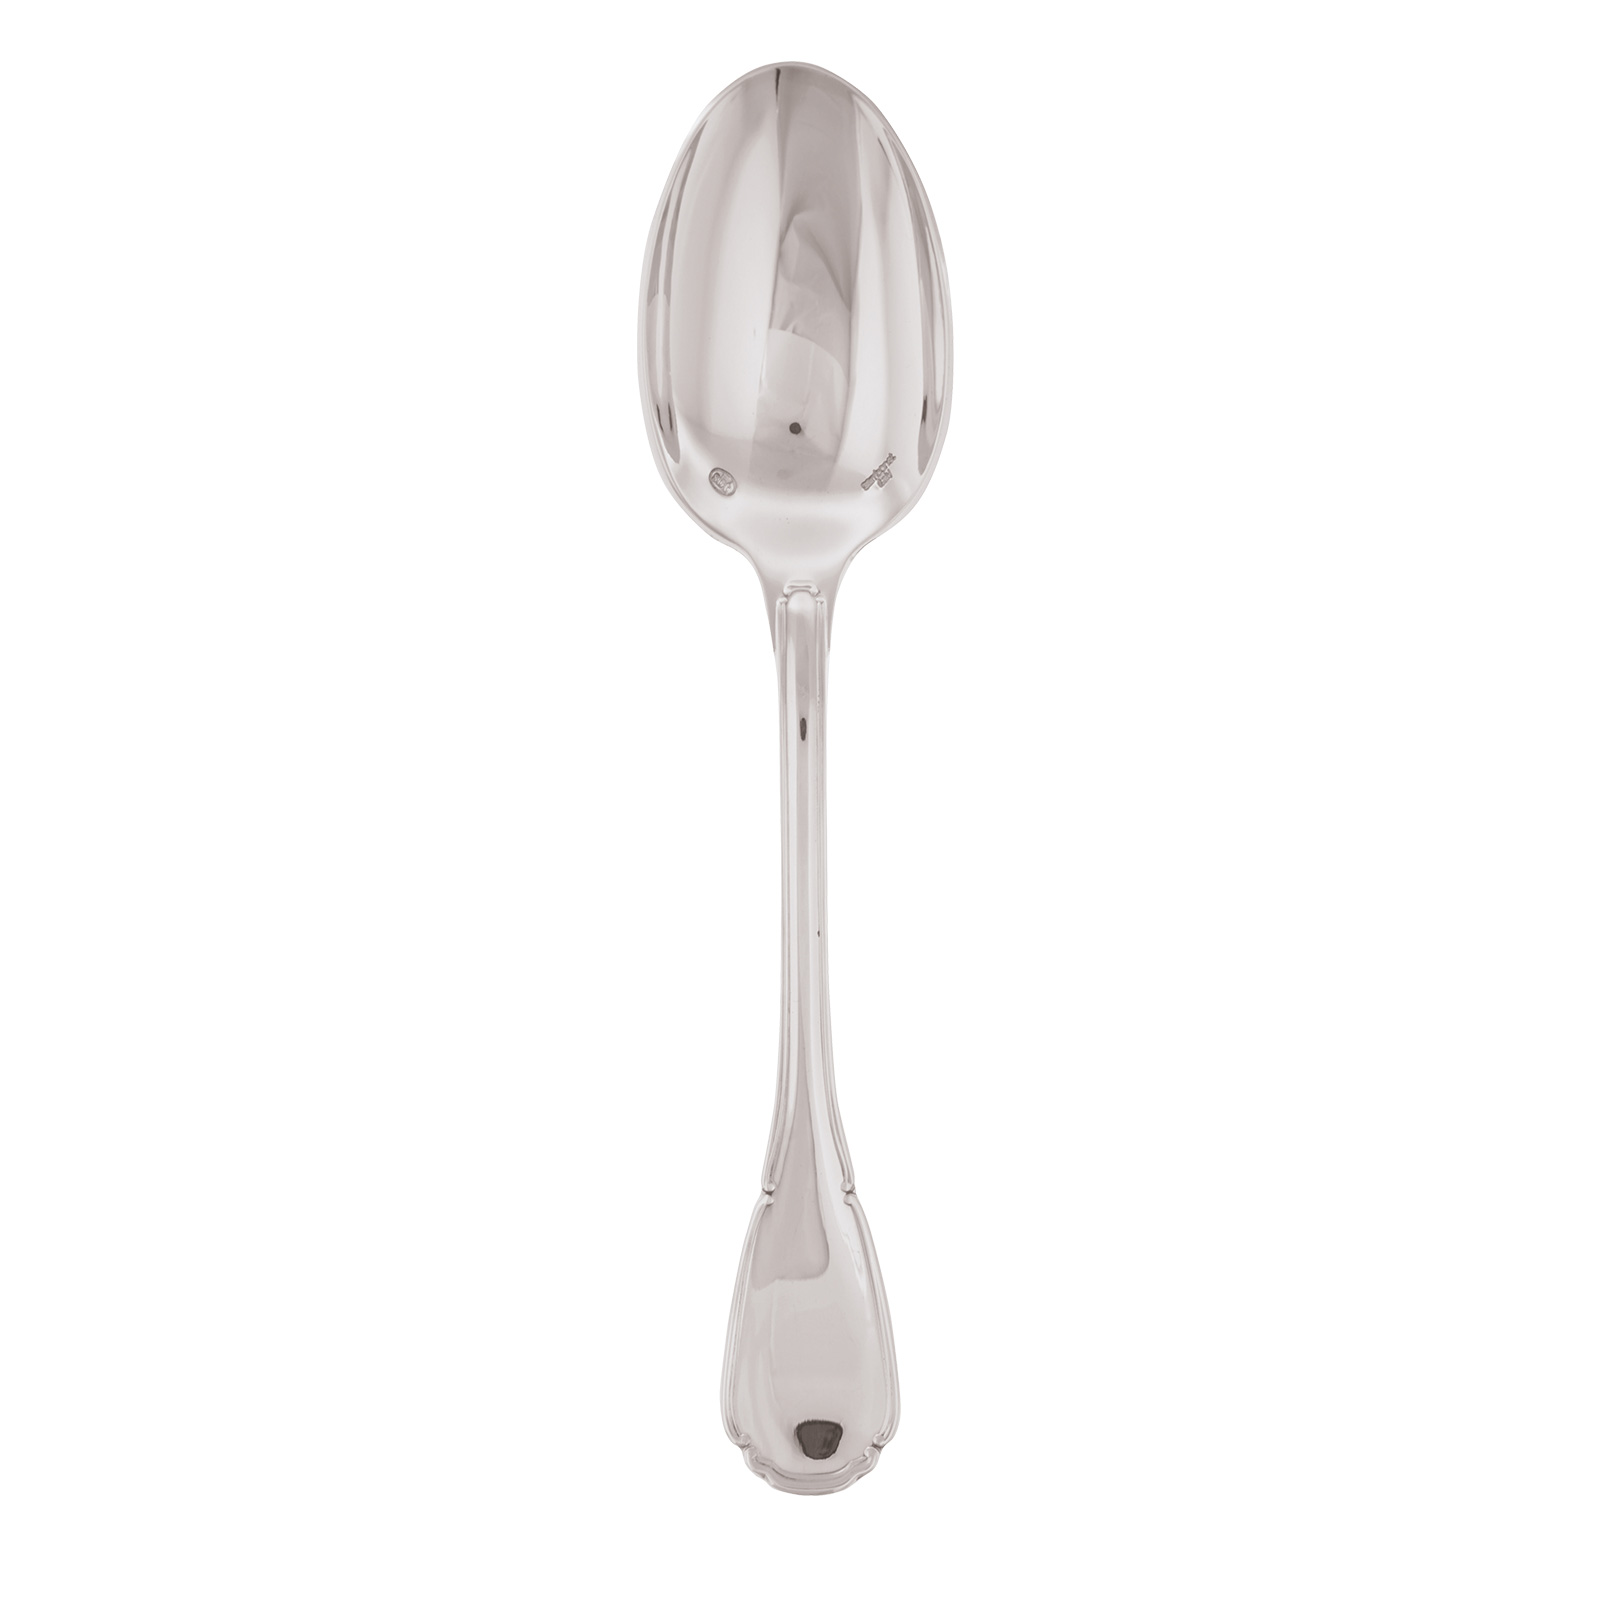 Rosenthal/Sambonet USA 52322-44 Serving Spoon, Solid